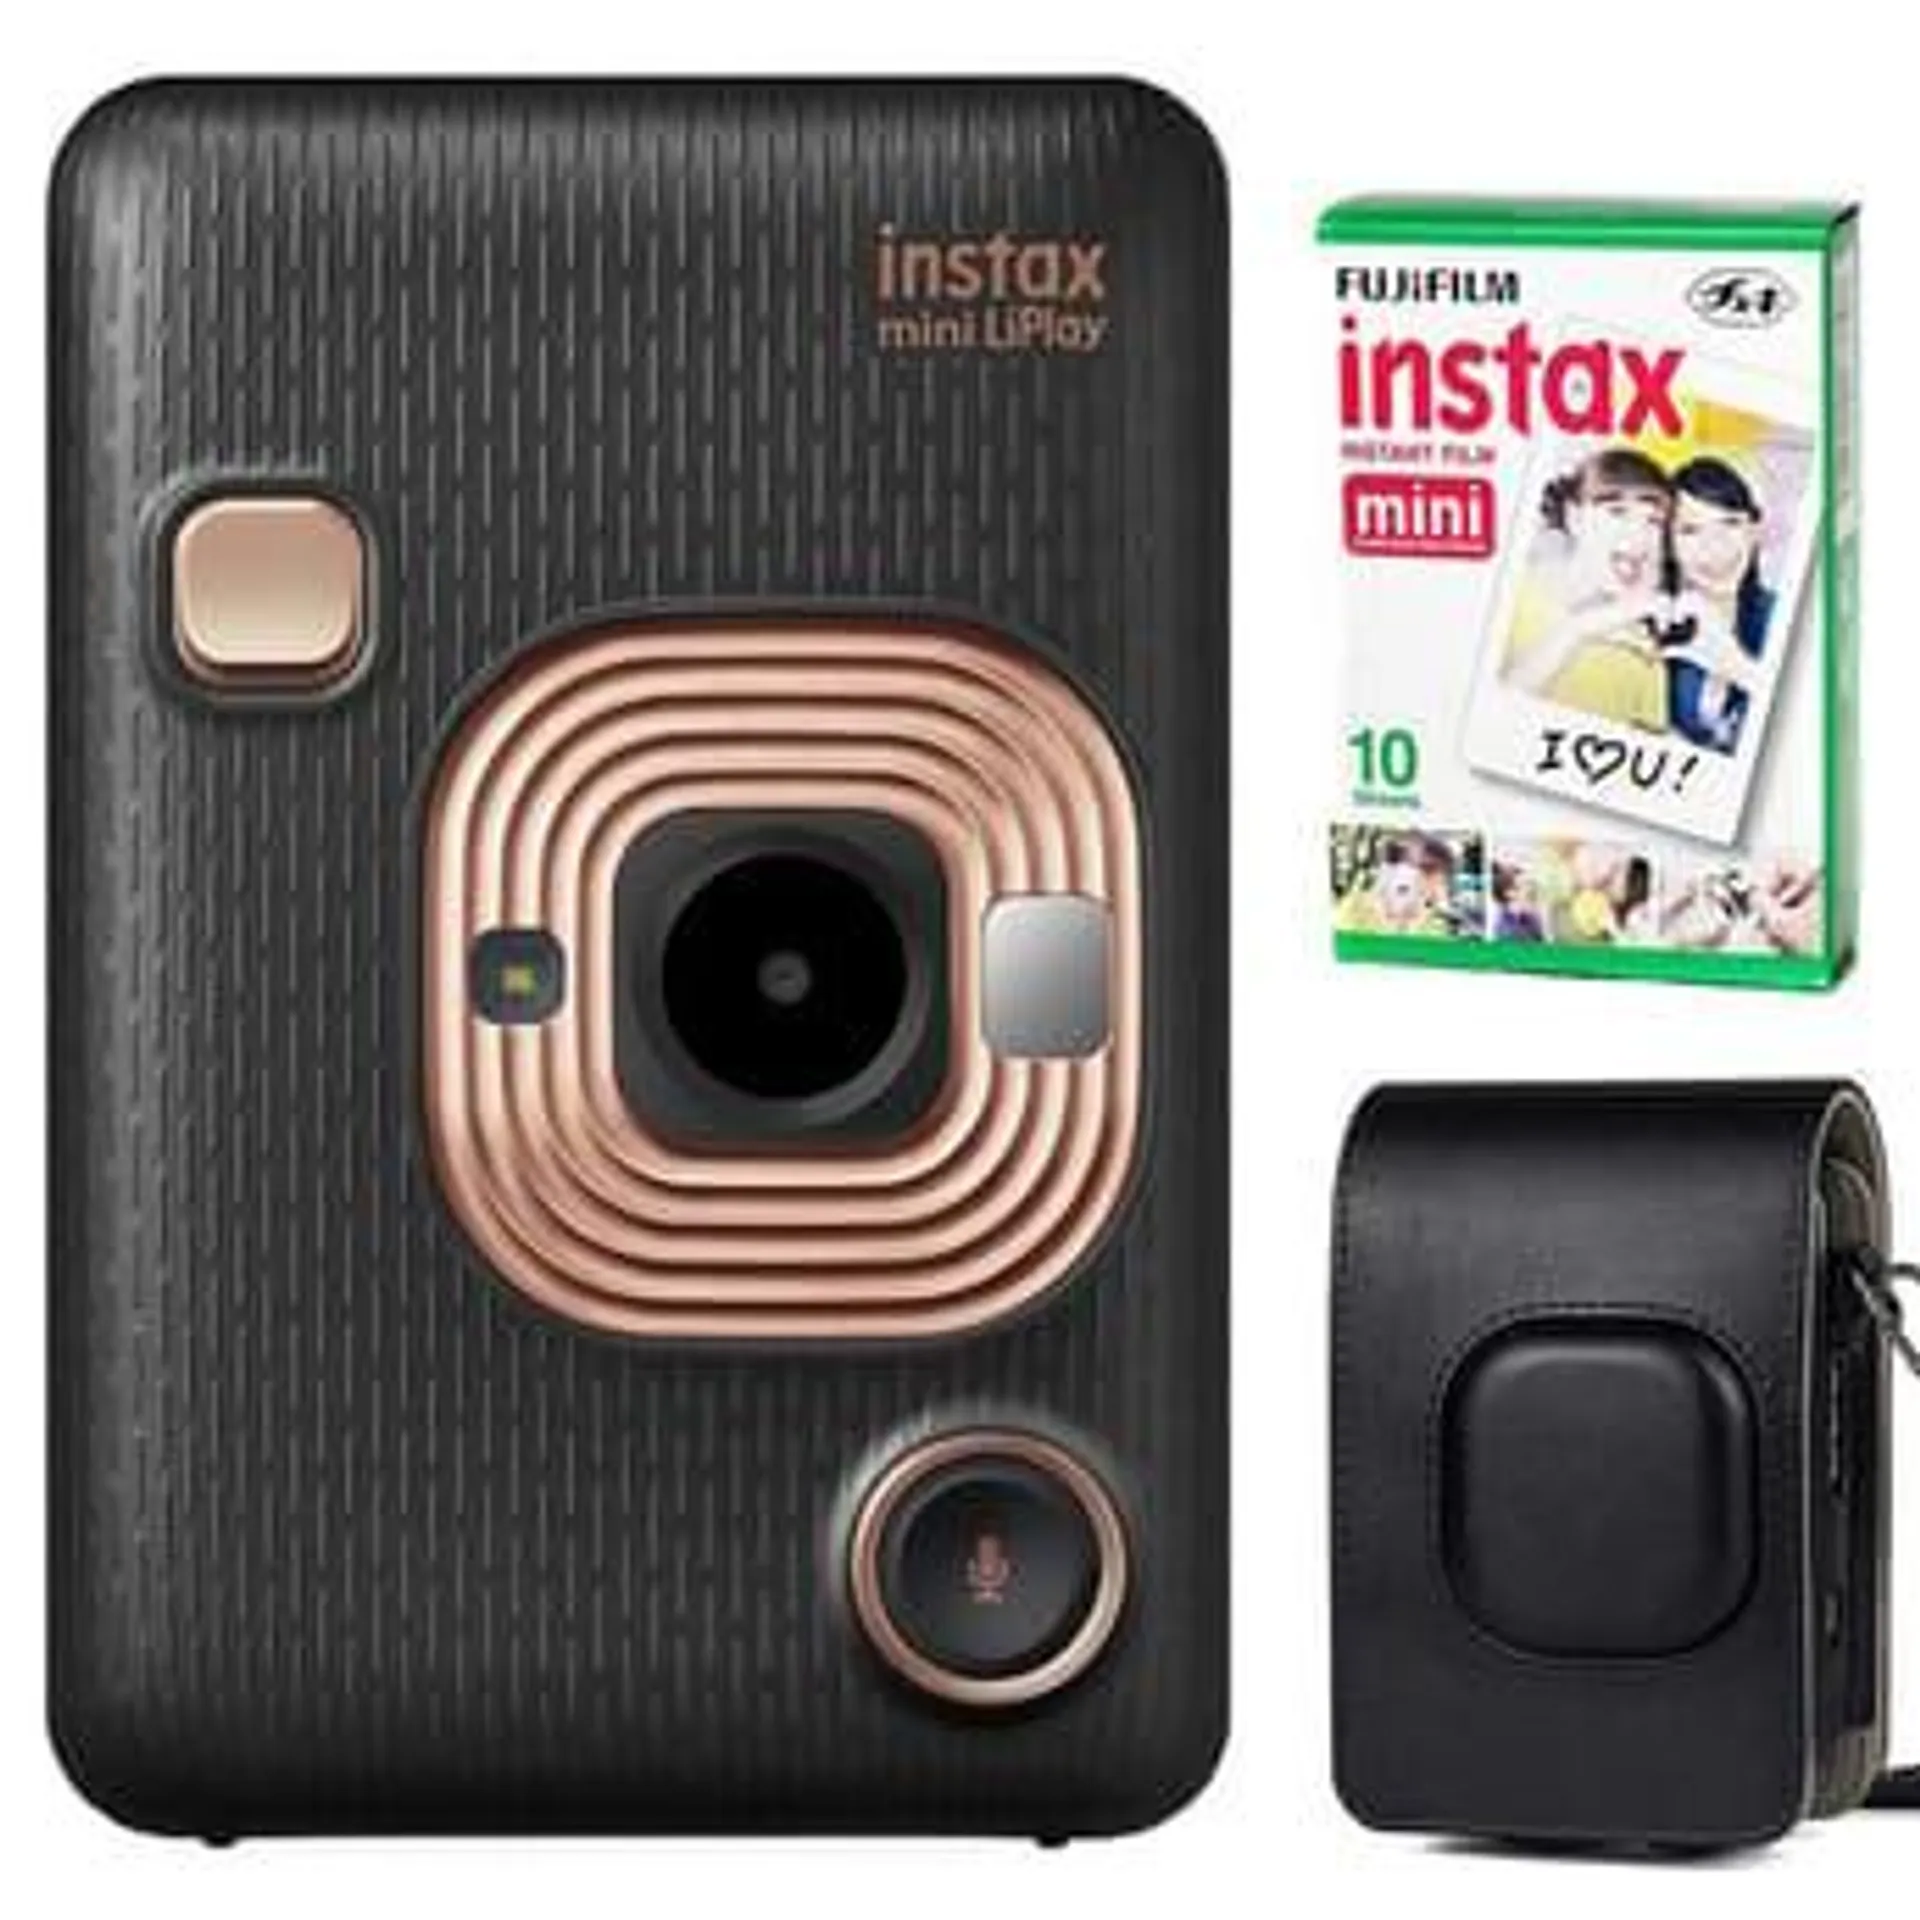 Fujifilm Instax Mini LiPlay Hybrid Instant Camera (Black) + Instant Film + Case